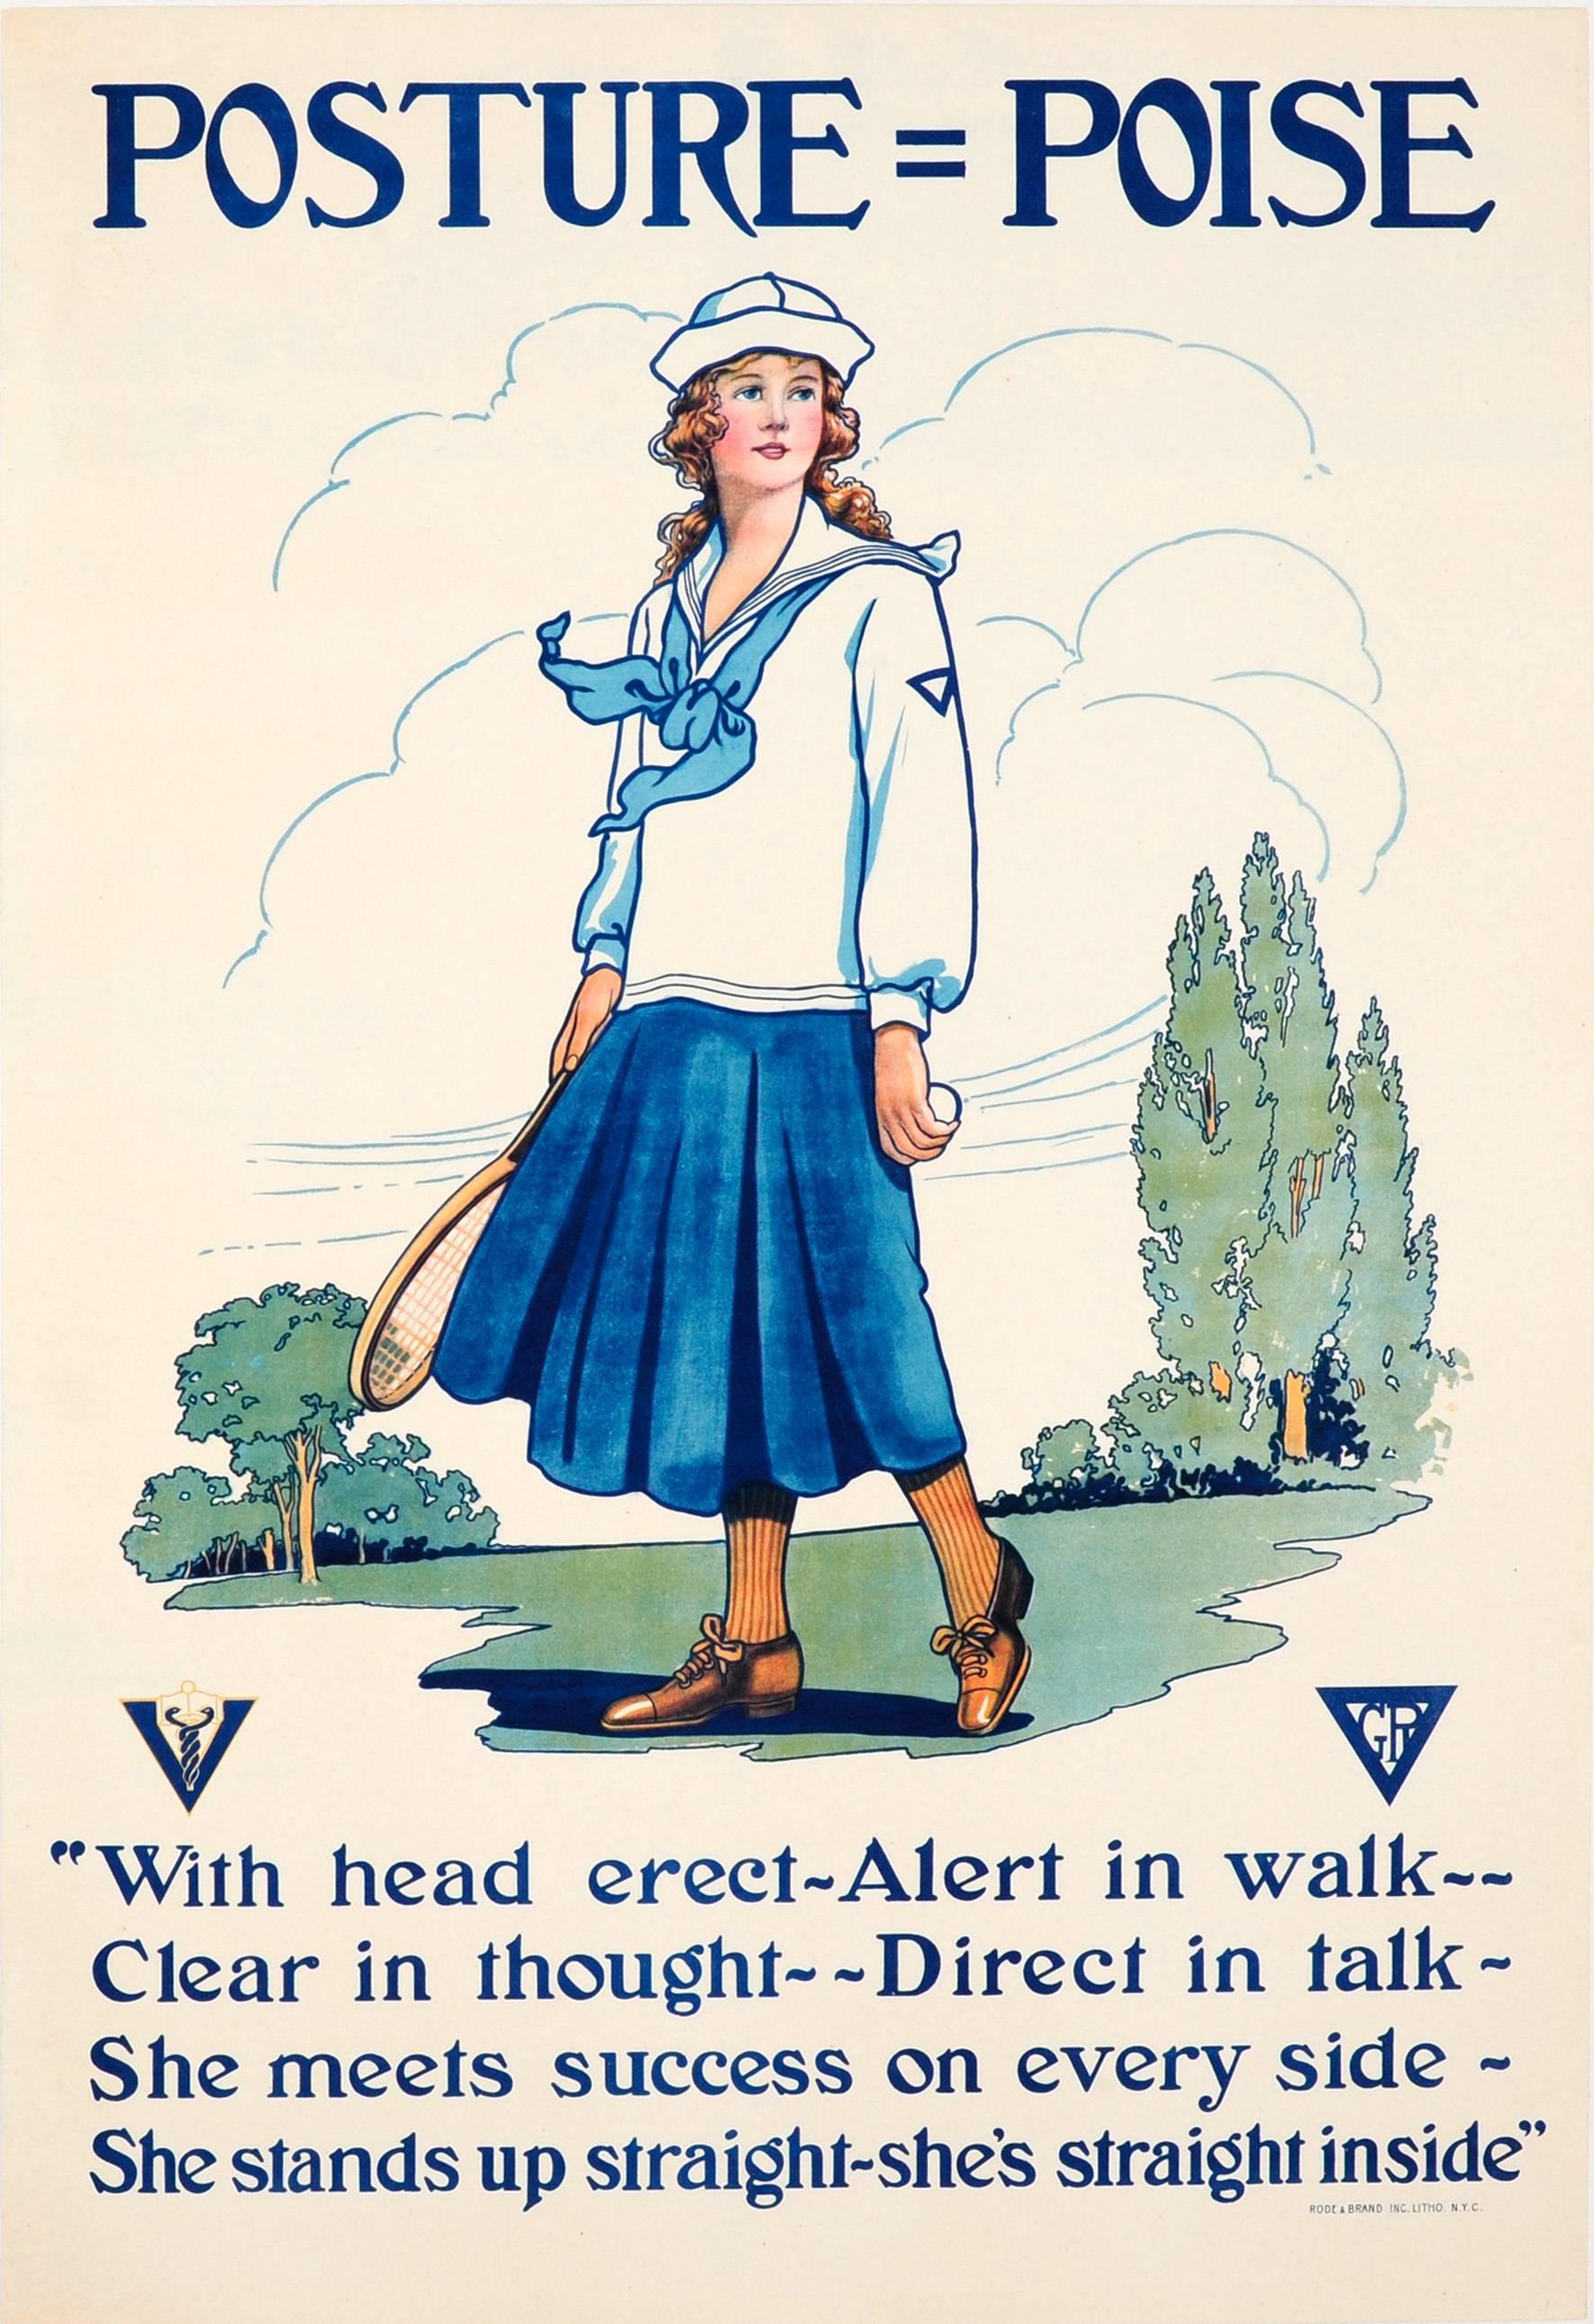 Unknown Print - Original Vintage YWCA Motivational Health Poster Posture Poise Featuring Tennis